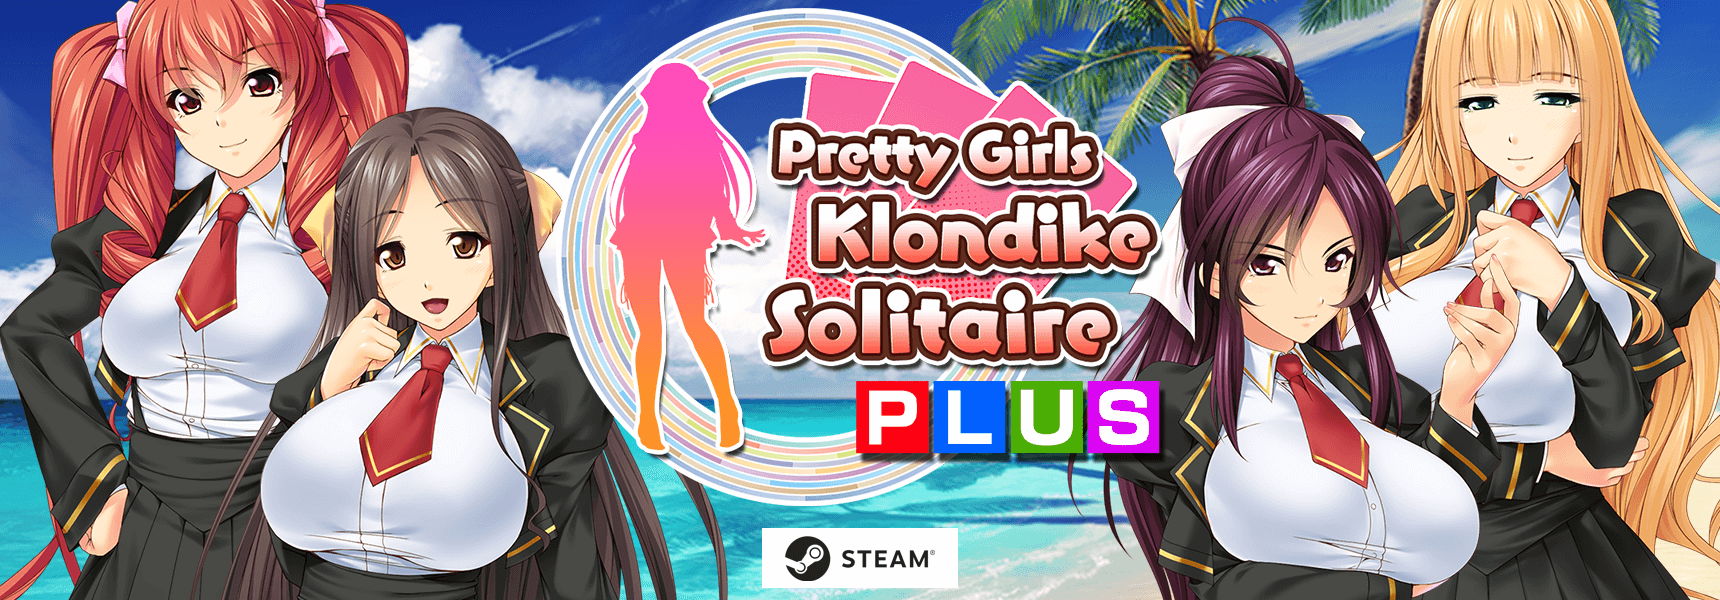 Pretty Girls Klondike Solitaire PLUS